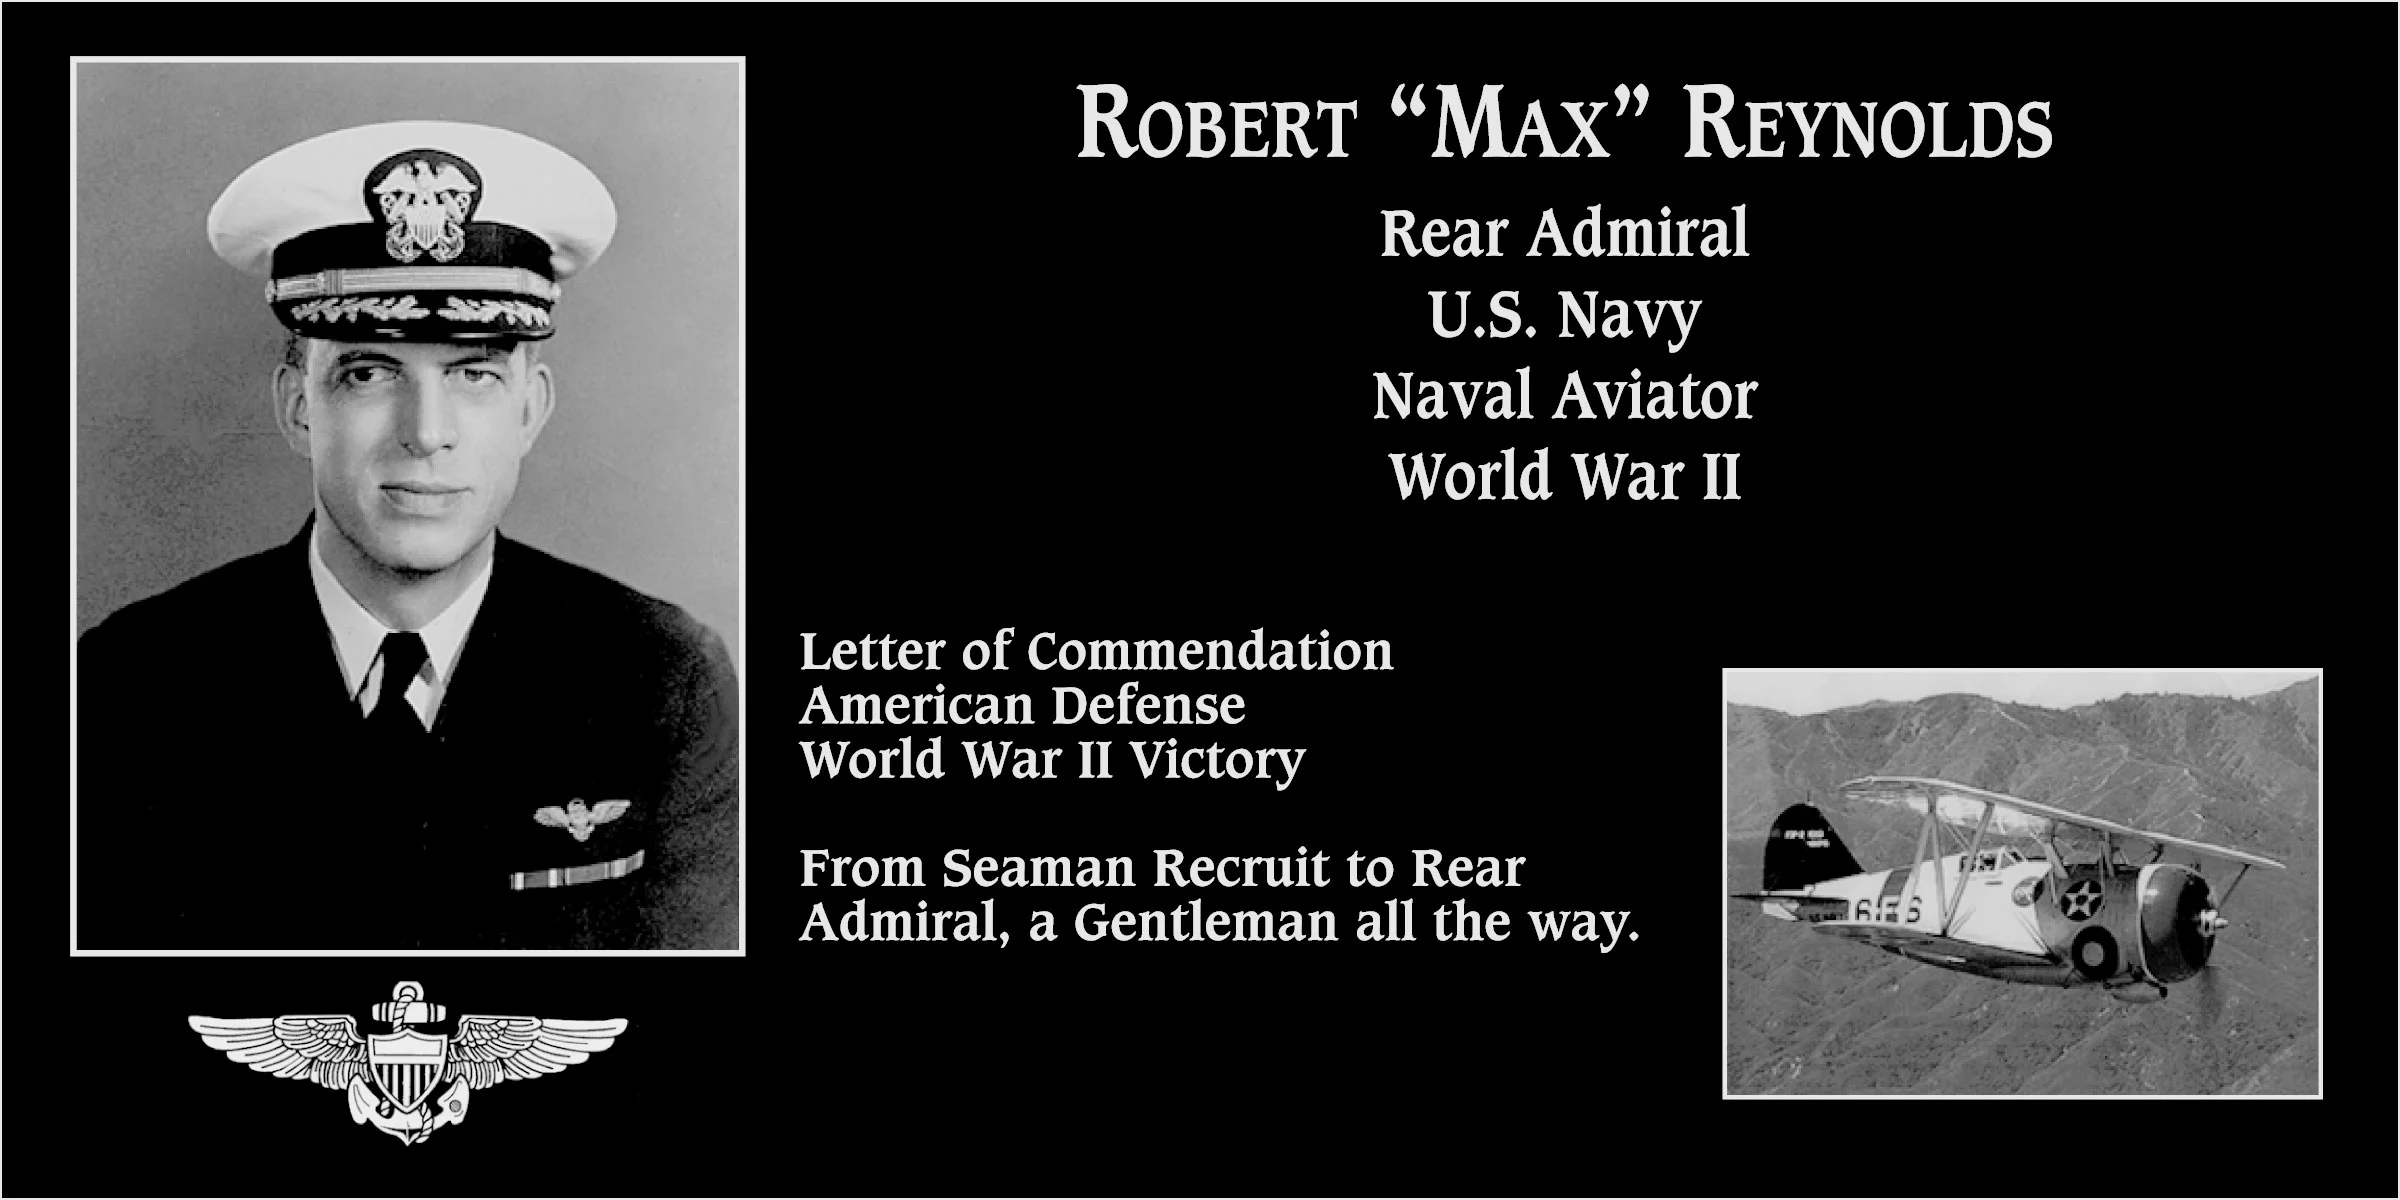 Robert “Max” Reynolds